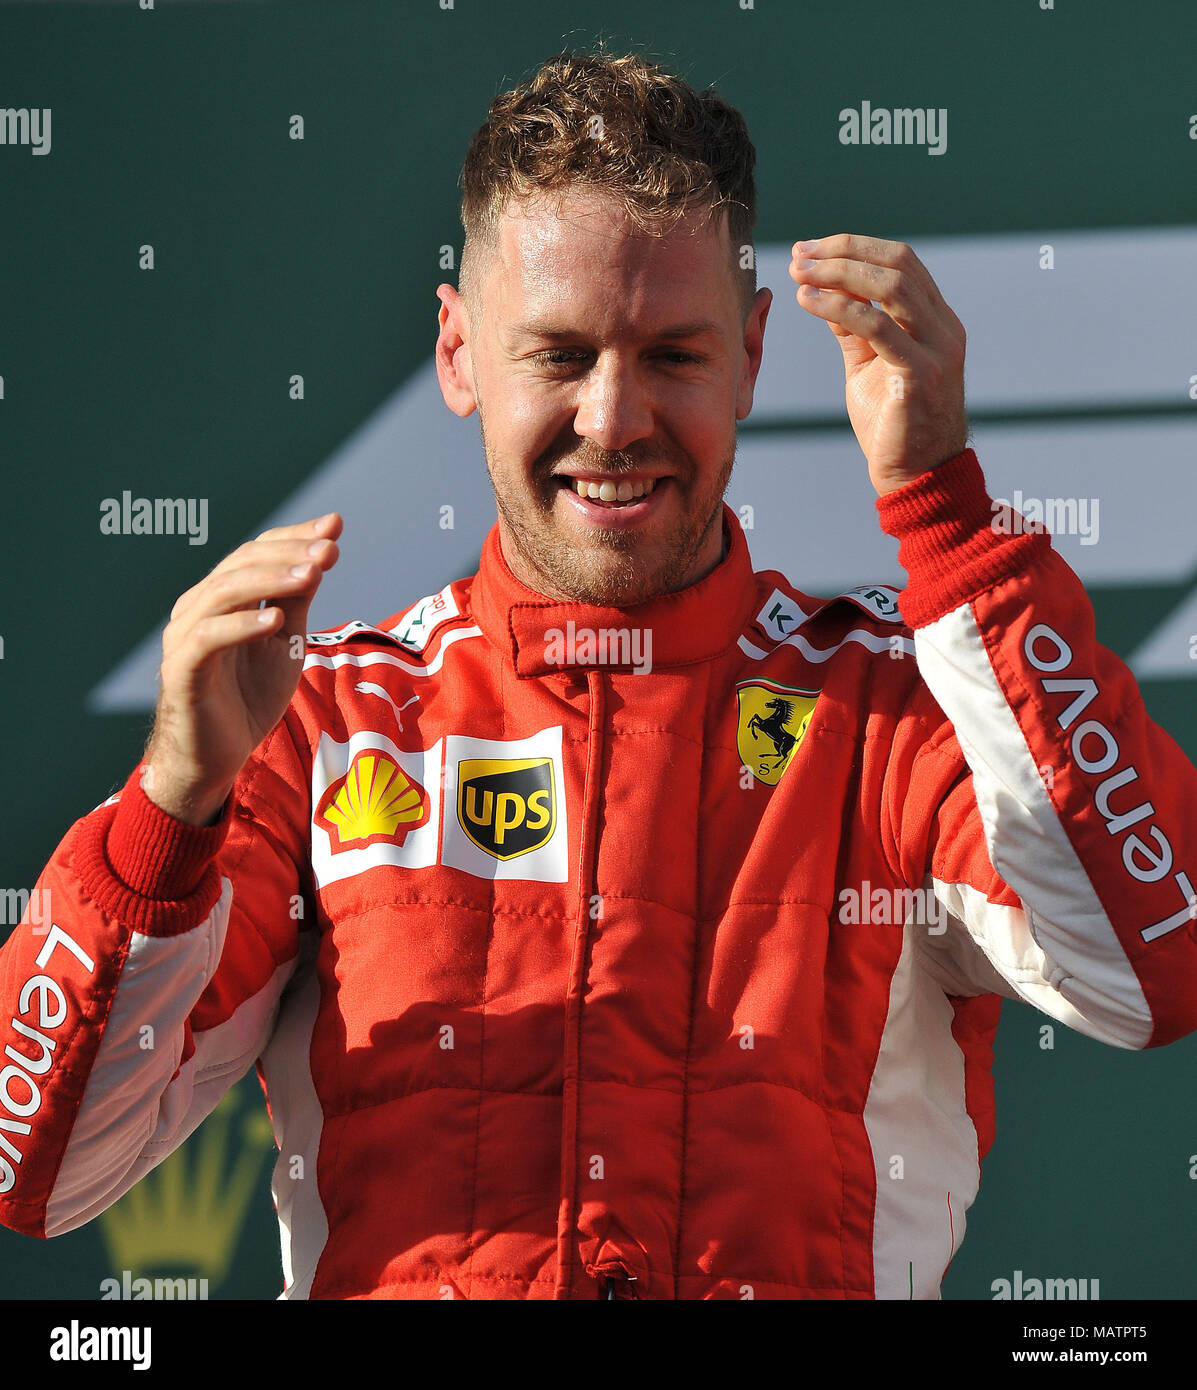 Race Winner Sebastian Vettel of Scuderia Ferrari.  Day 4, Race Day, of the 2018 Formula 1 Rolex Australian Grand Prix held at The circuit of Albert Park, Melbourne, Victoria on the 25th March 2018. Stock Photo